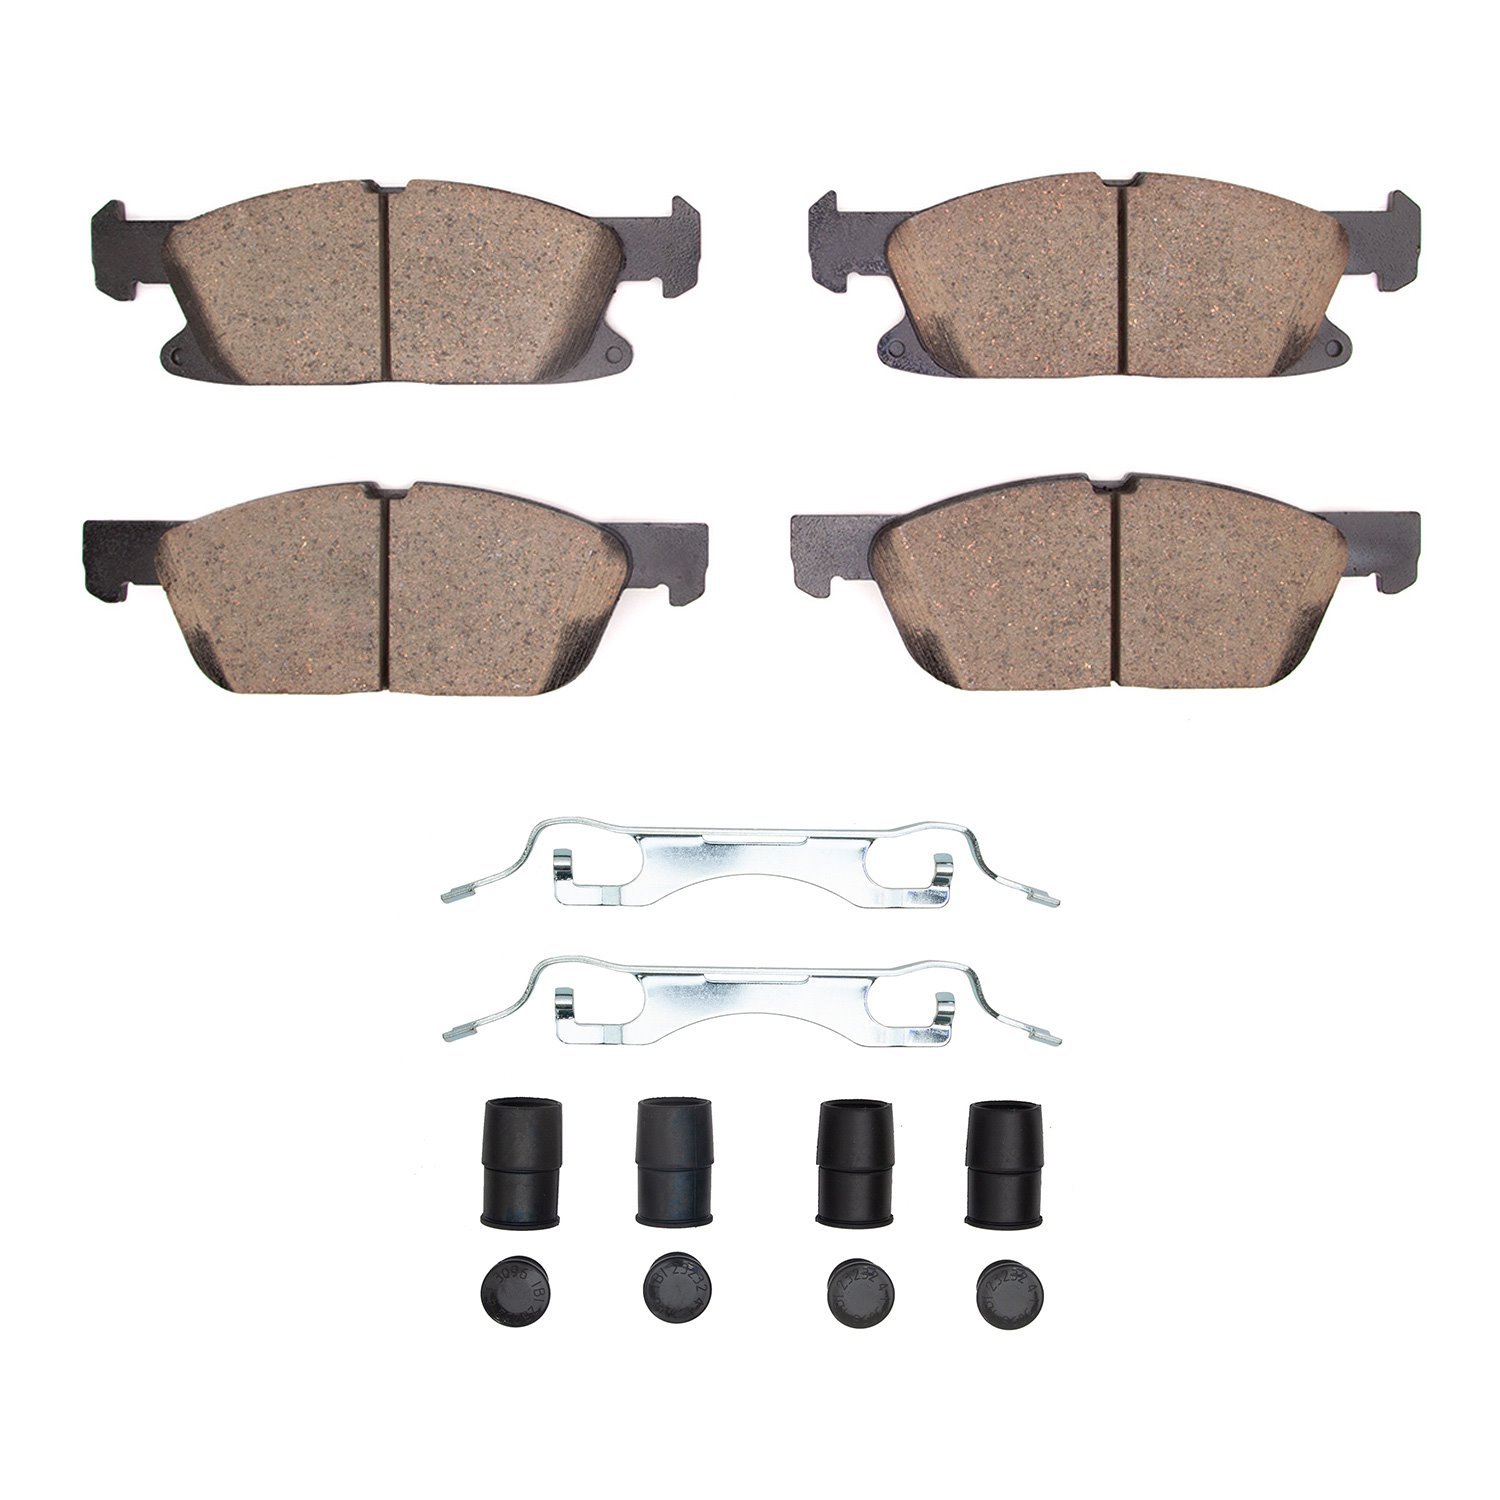 1311-2180-01 3000-Series Semi-Metallic Brake Pads & Hardware Kit, Fits Select Ford/Lincoln/Mercury/Mazda, Position: Front